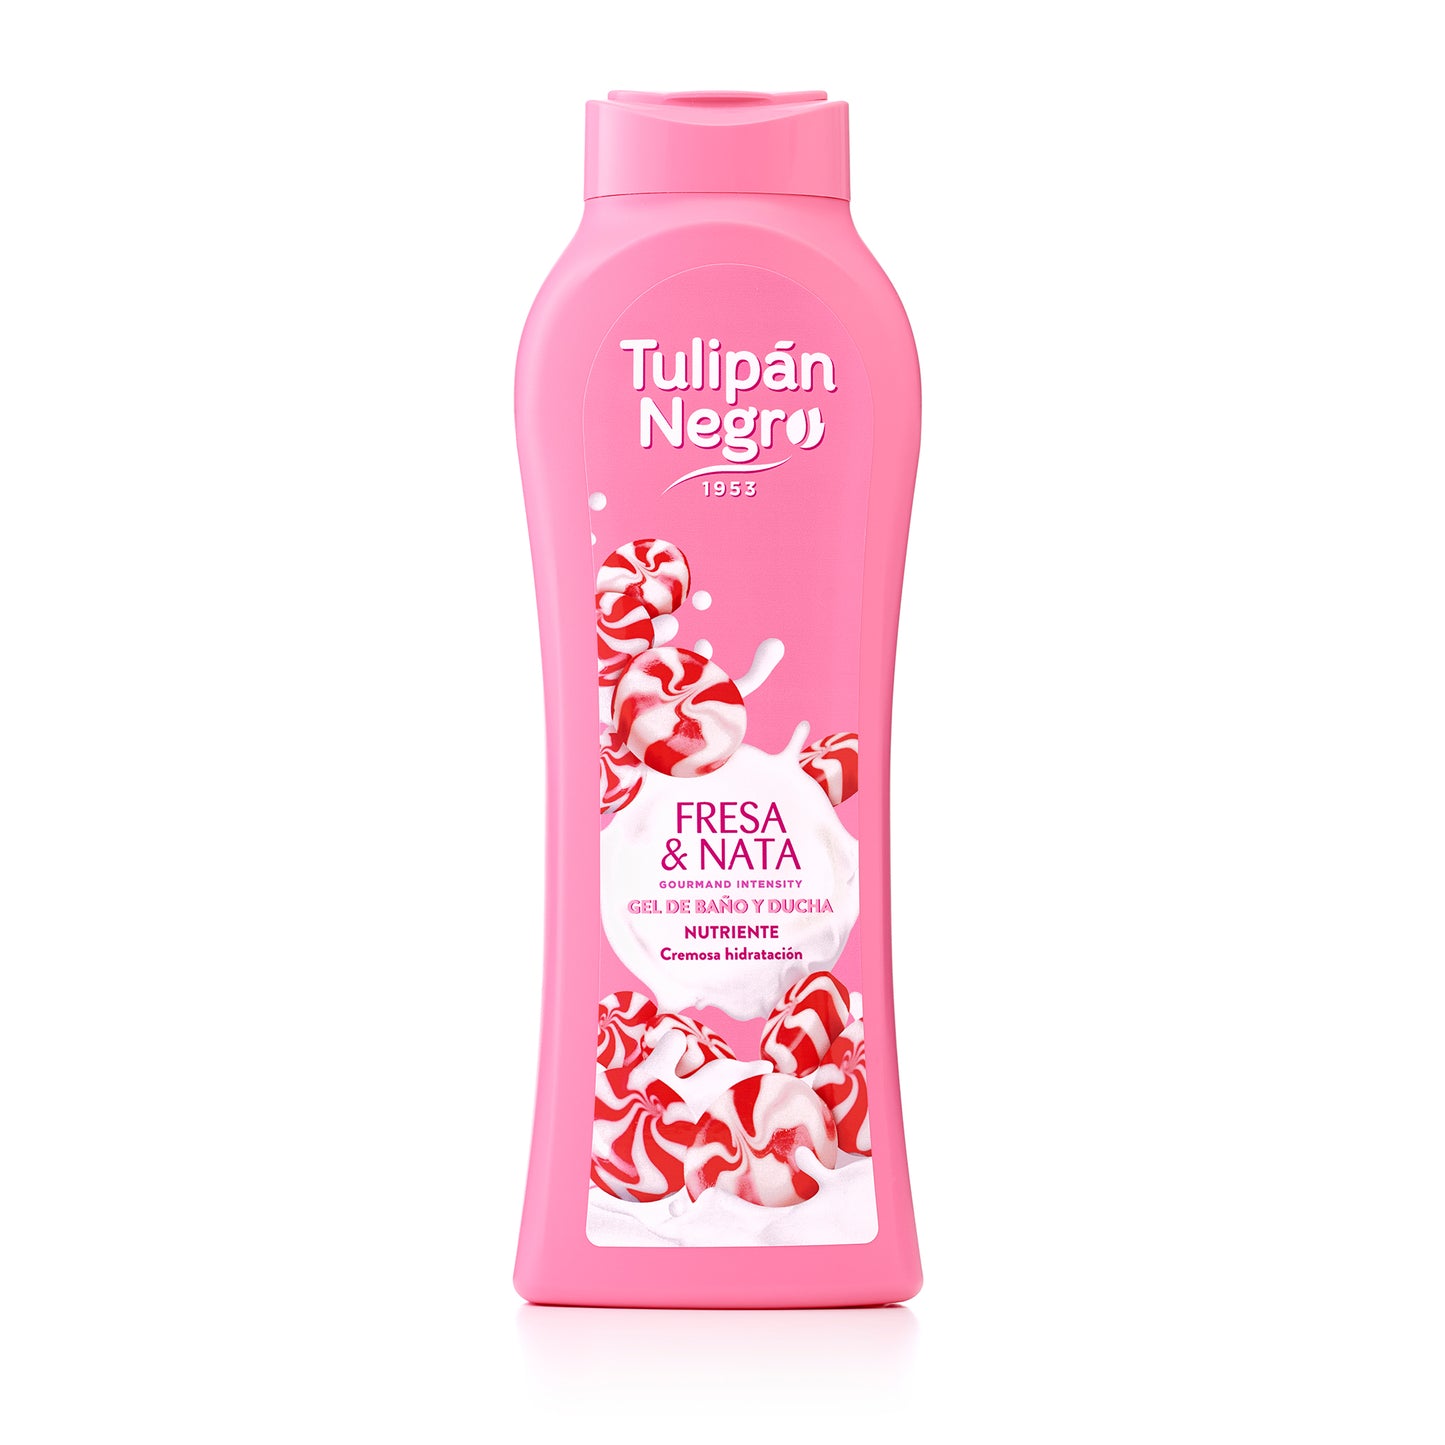 Tulipán Negro Strawberry and Cream Body Wash - 650ML